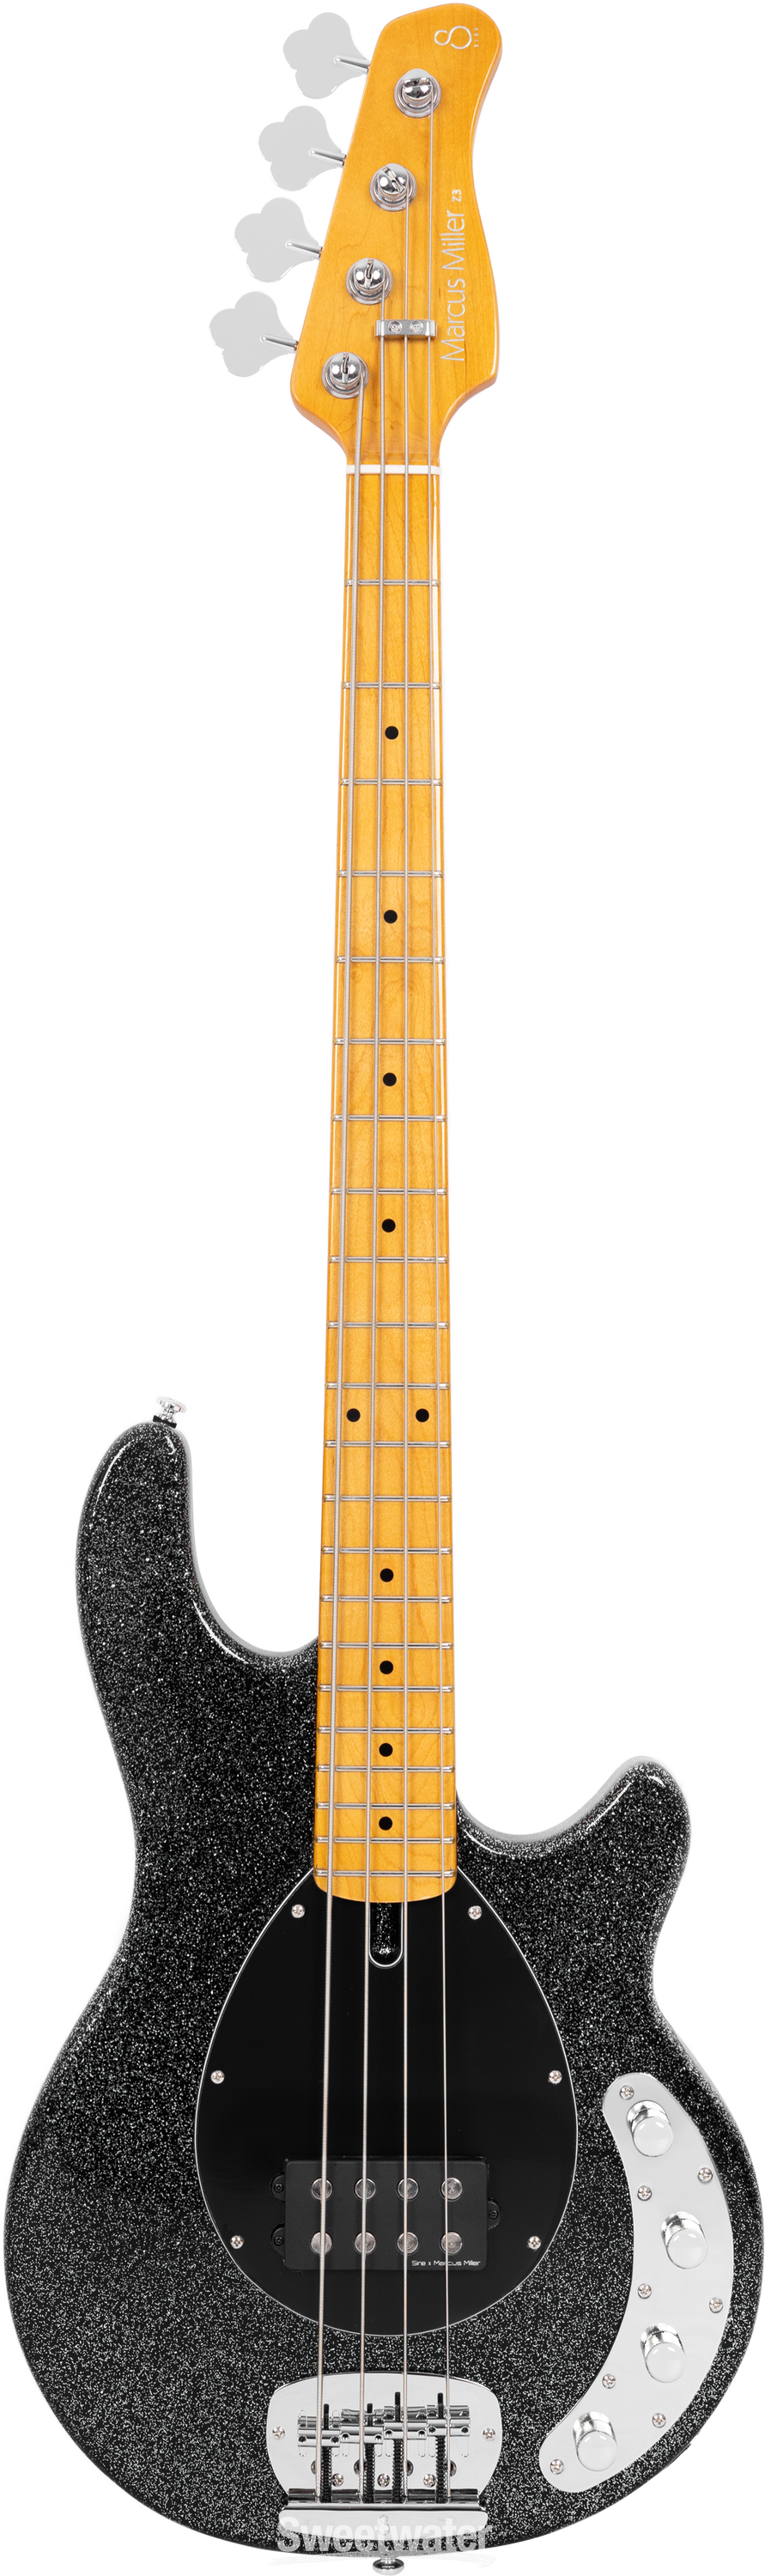 Sire Marcus Miller Z3 4-string Bass Guitar - Sparkle Black 